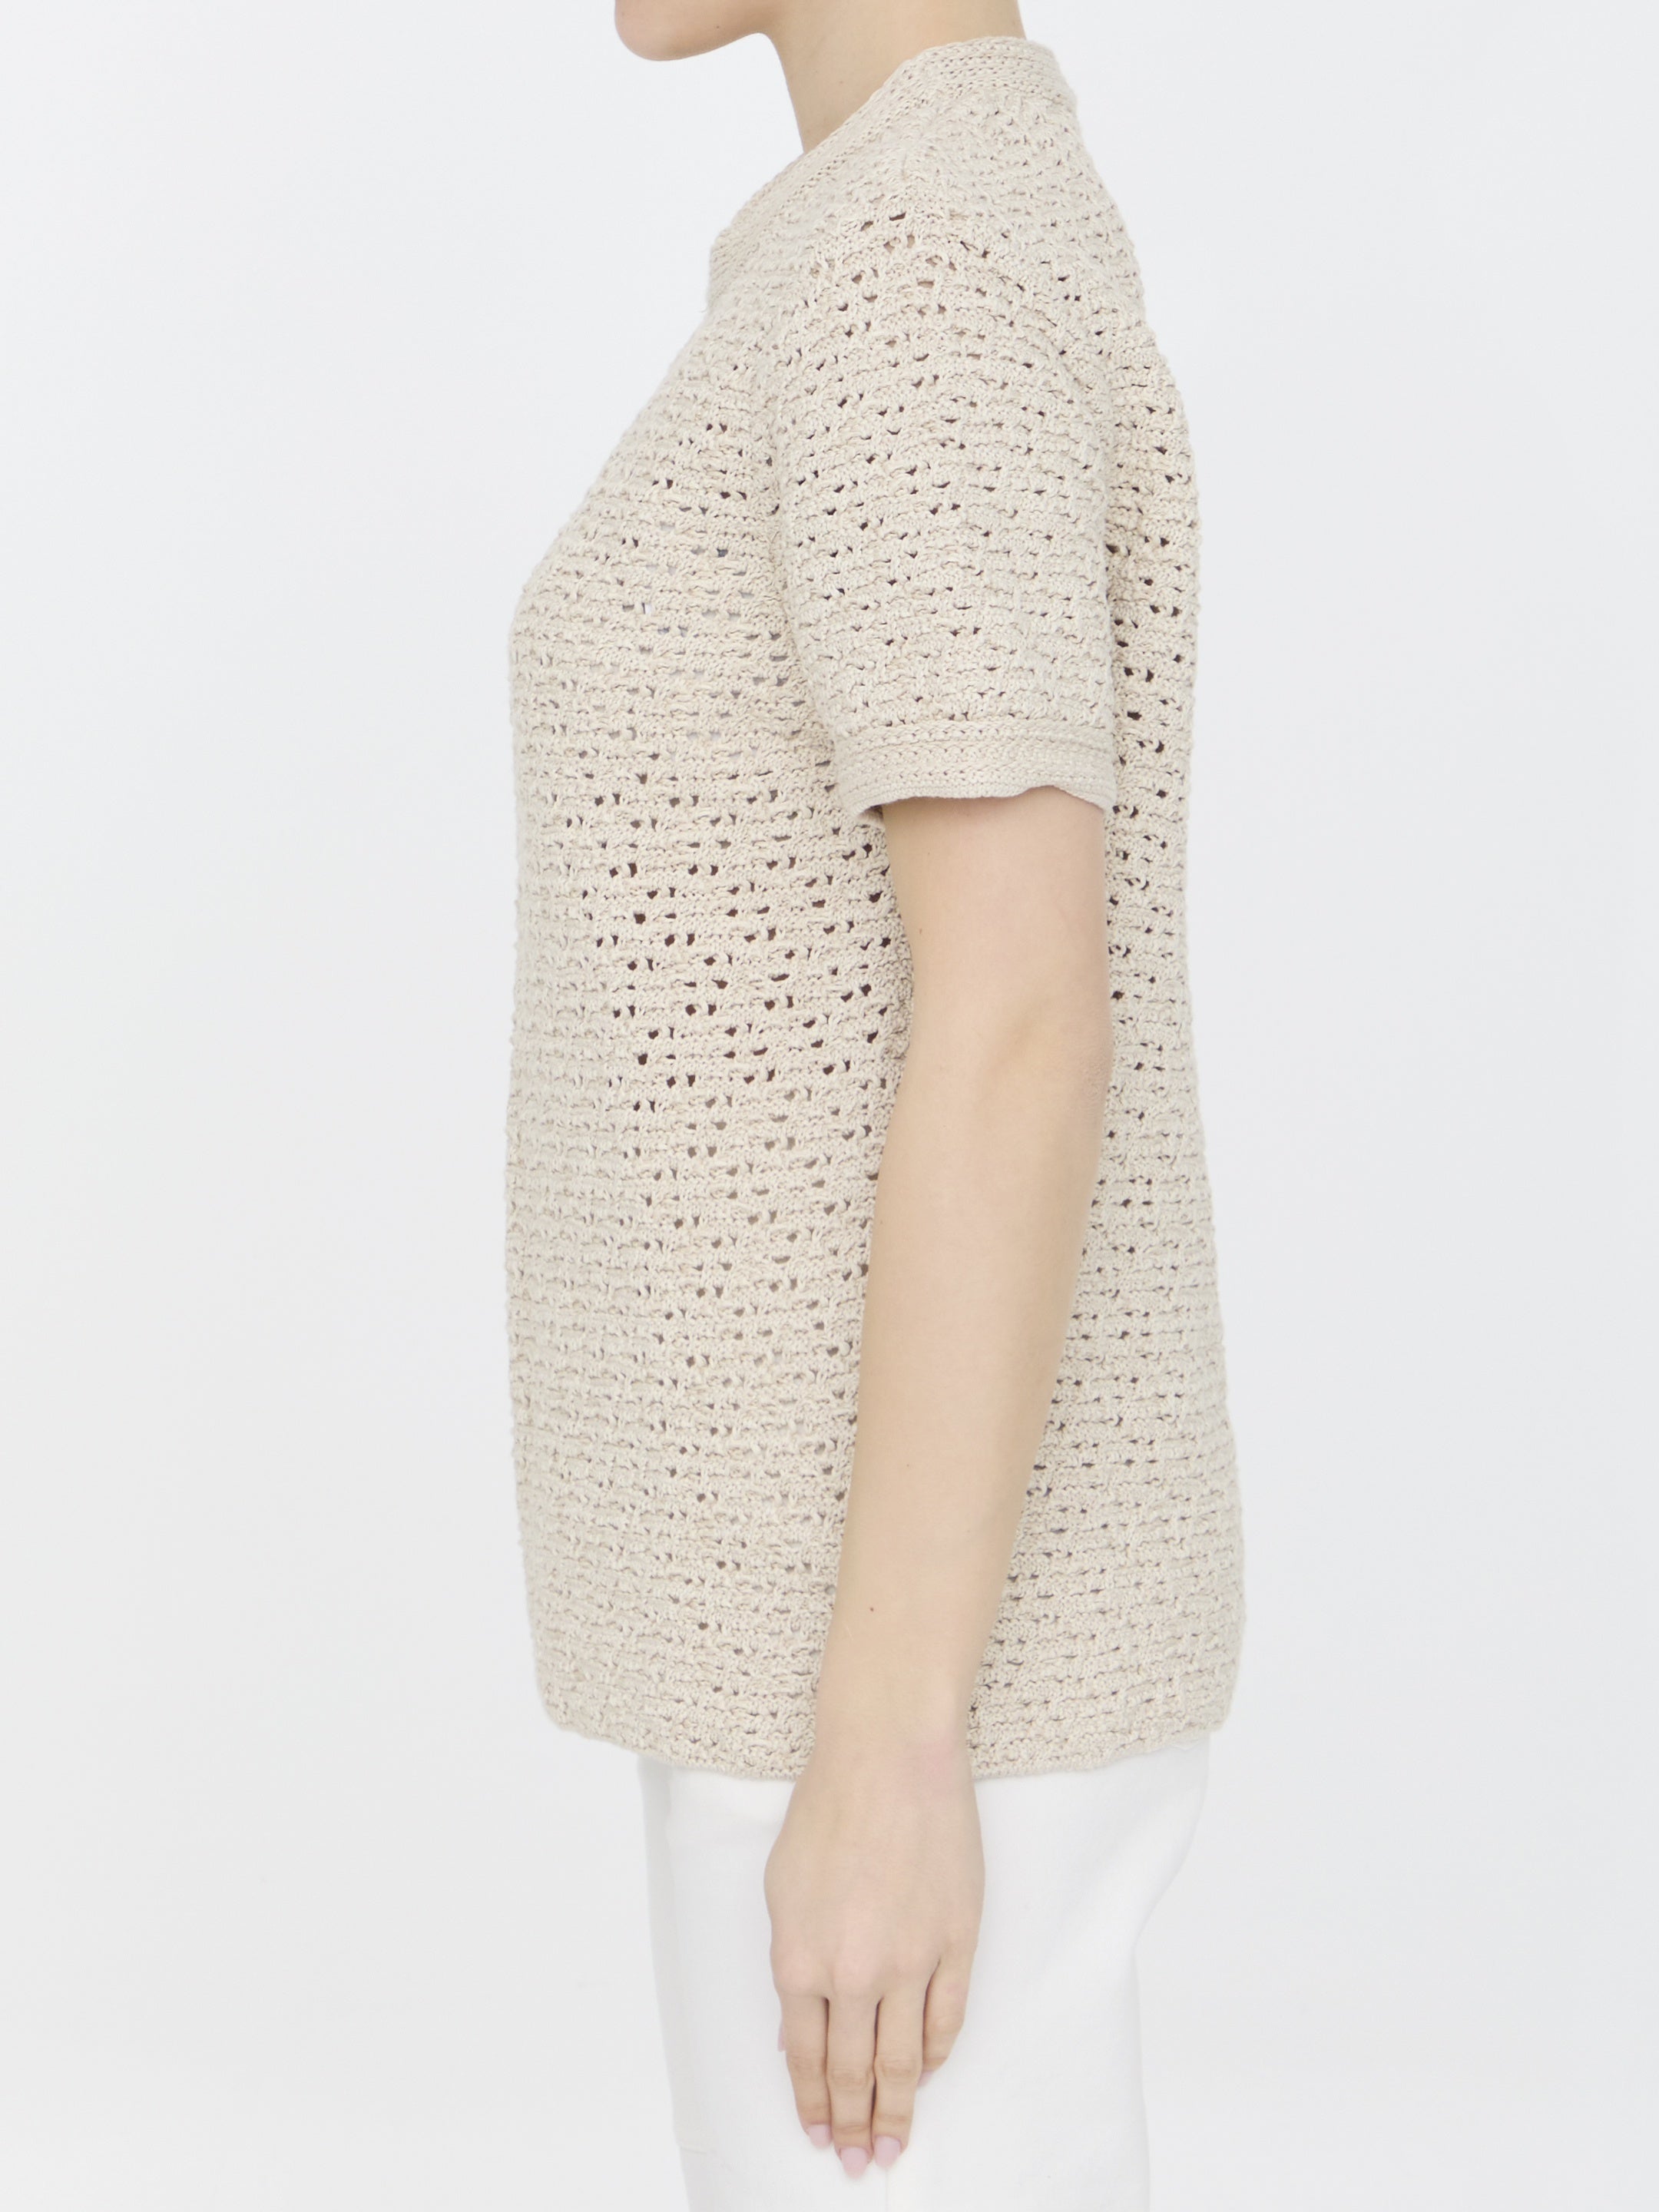 BOTTEGA-VENETA-OUTLET-SALE-Crochet-knit-t-shirt-Strick-XS-BEIGE-ARCHIVE-COLLECTION-3.jpg